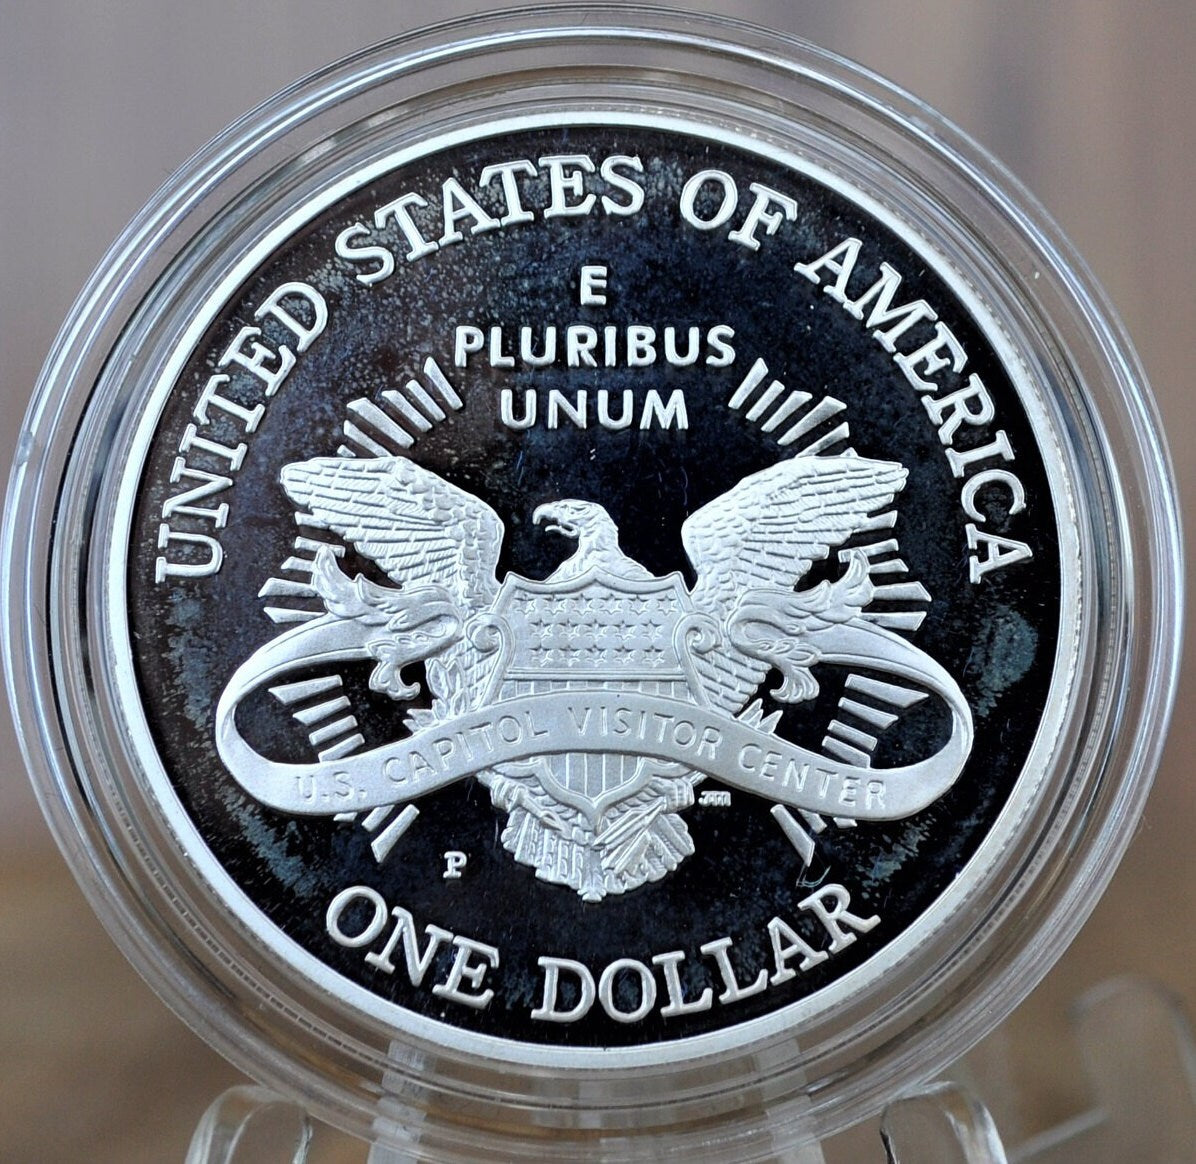 2001 U.S. Capitol Commemorative Silver Dollar - In Original Mint Case -Proof, Silver - United States Capitol Commemorative Silver Dollar